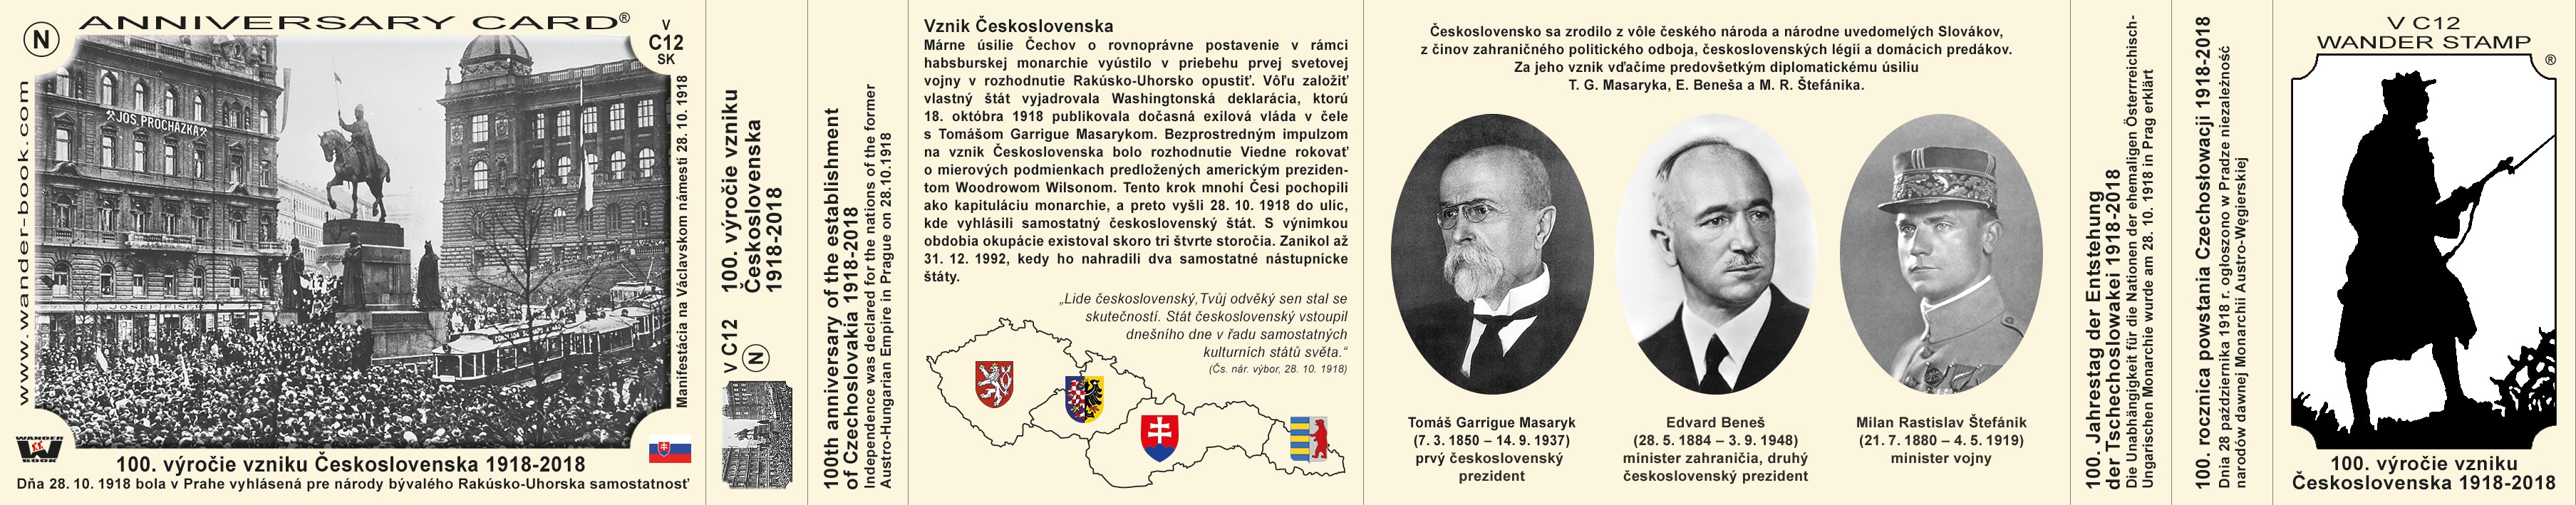 100-vyroci-vzniku-ceskoslovenska-1918-2018-15196